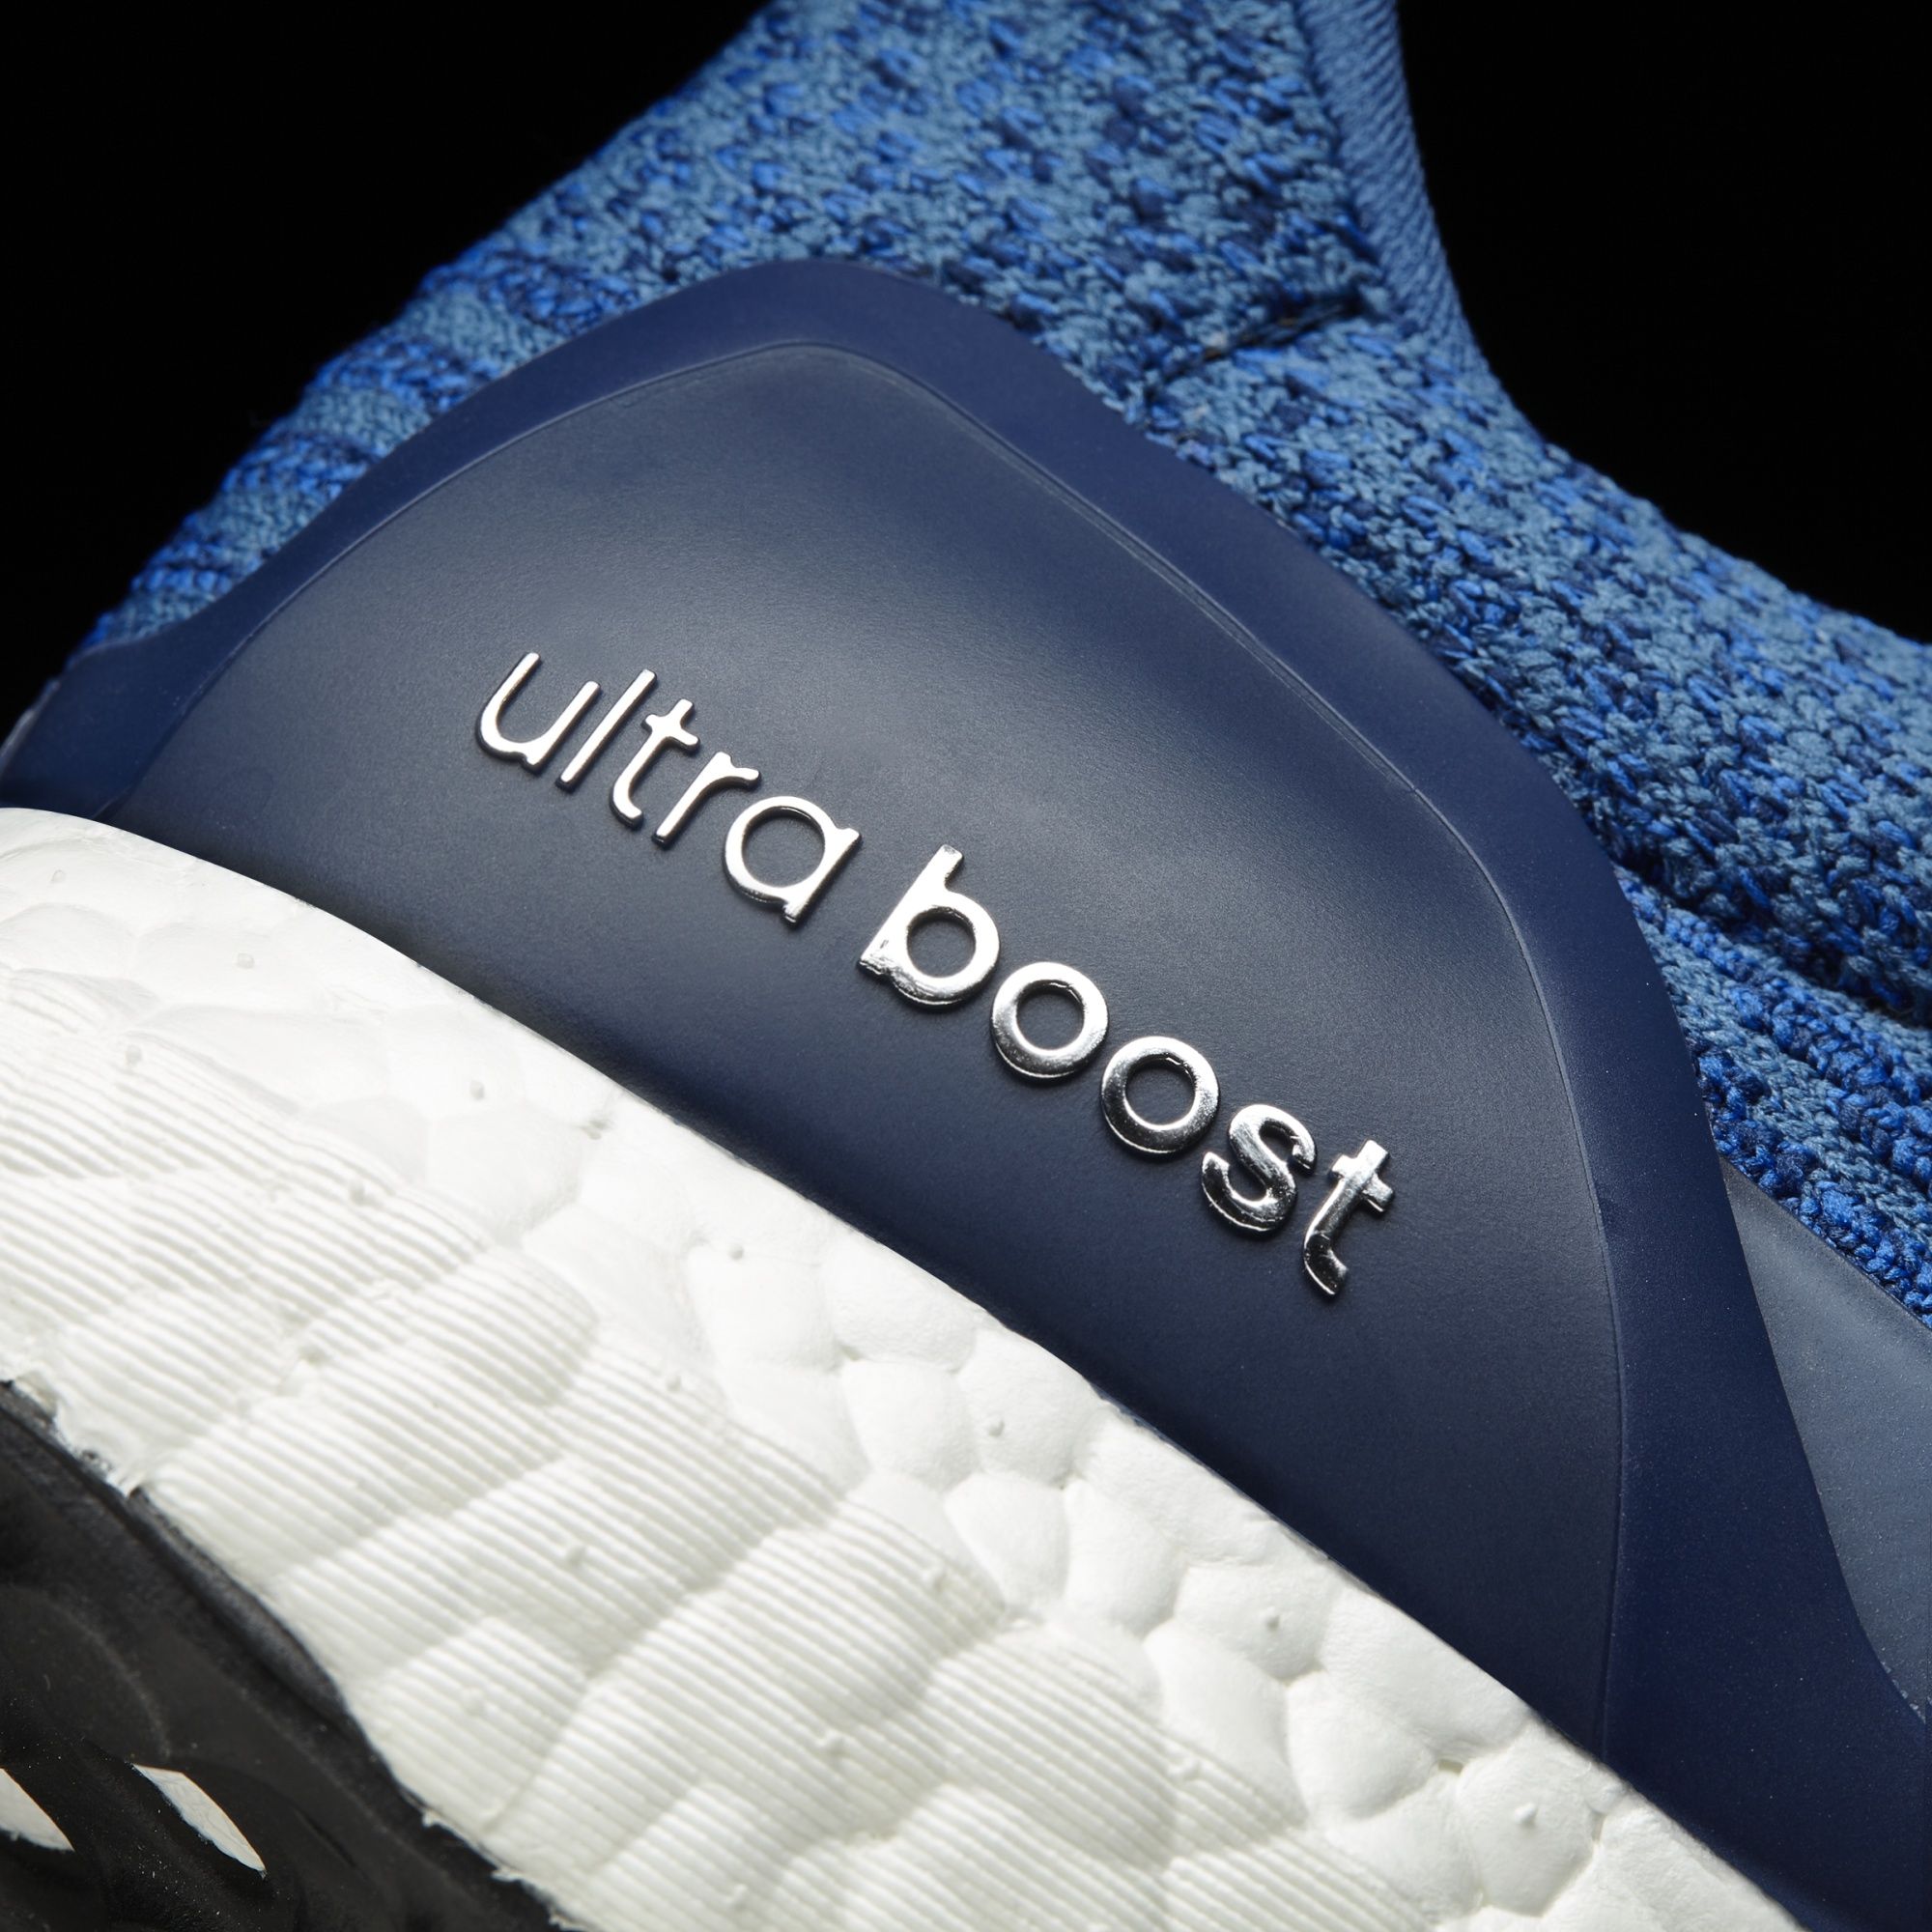 Adidas Ultra Boost
Core Blue / Mystery Blue